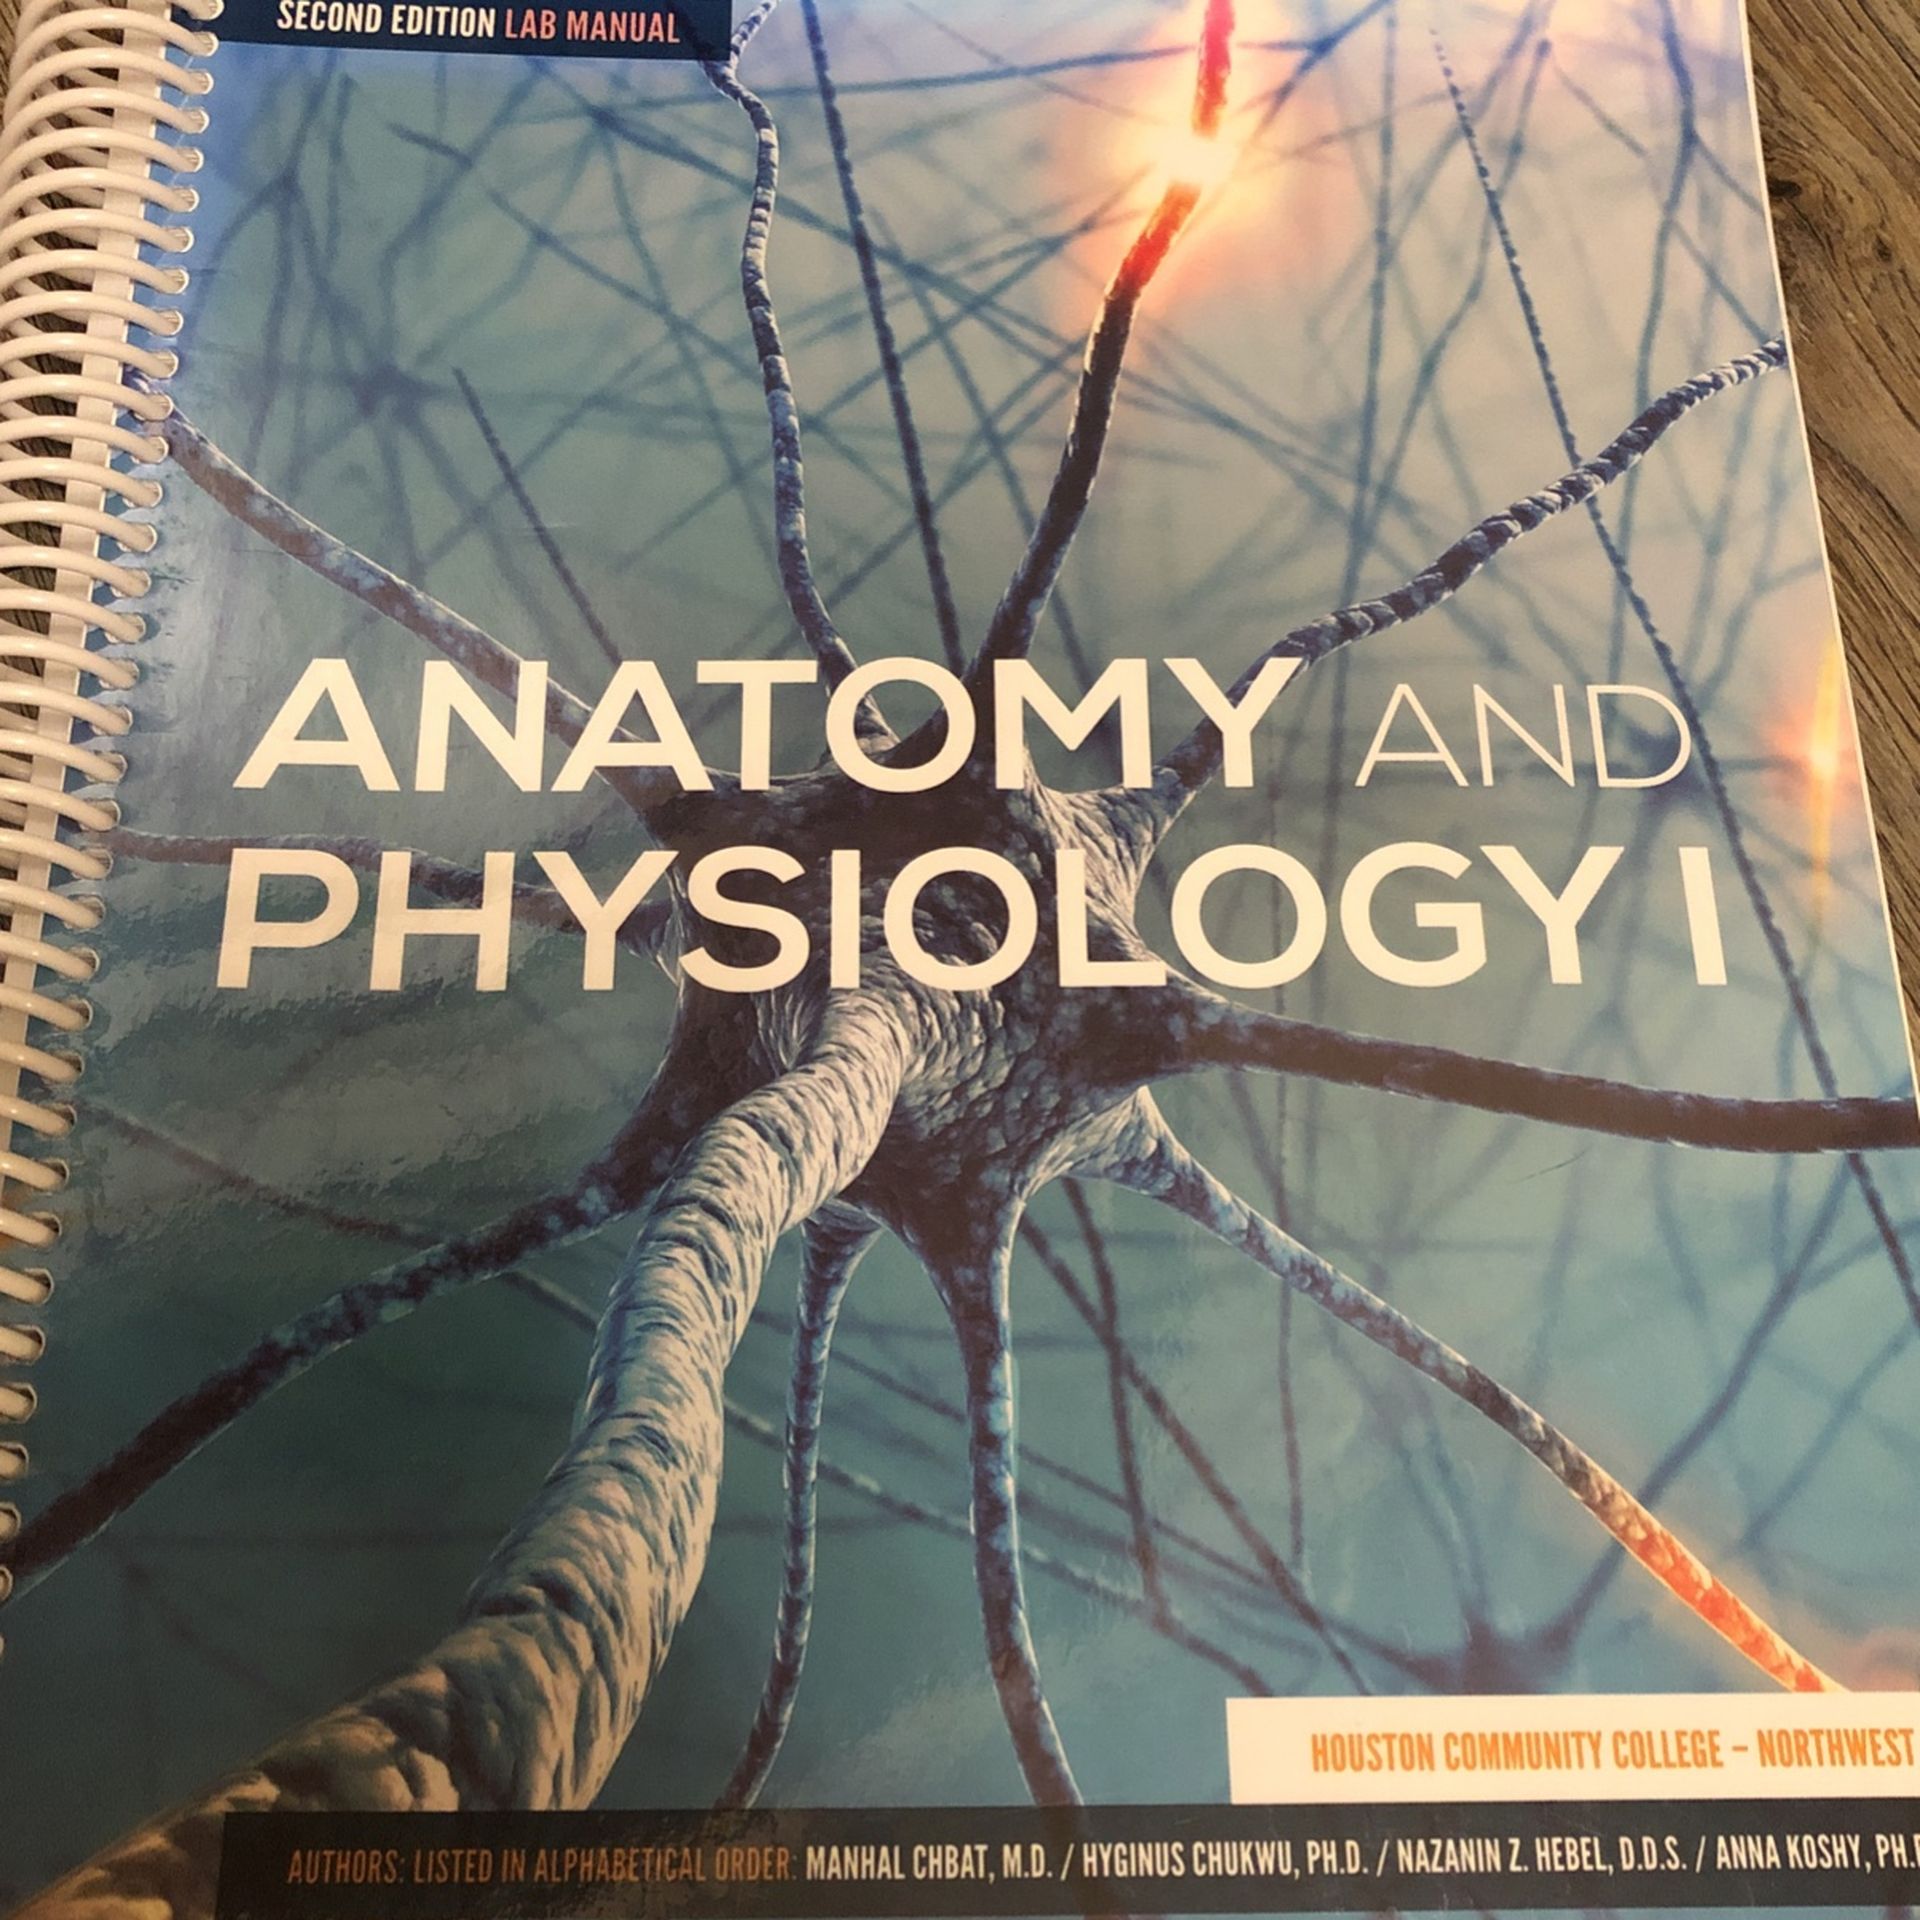 Anatomy and Physiology I Lab Manual 